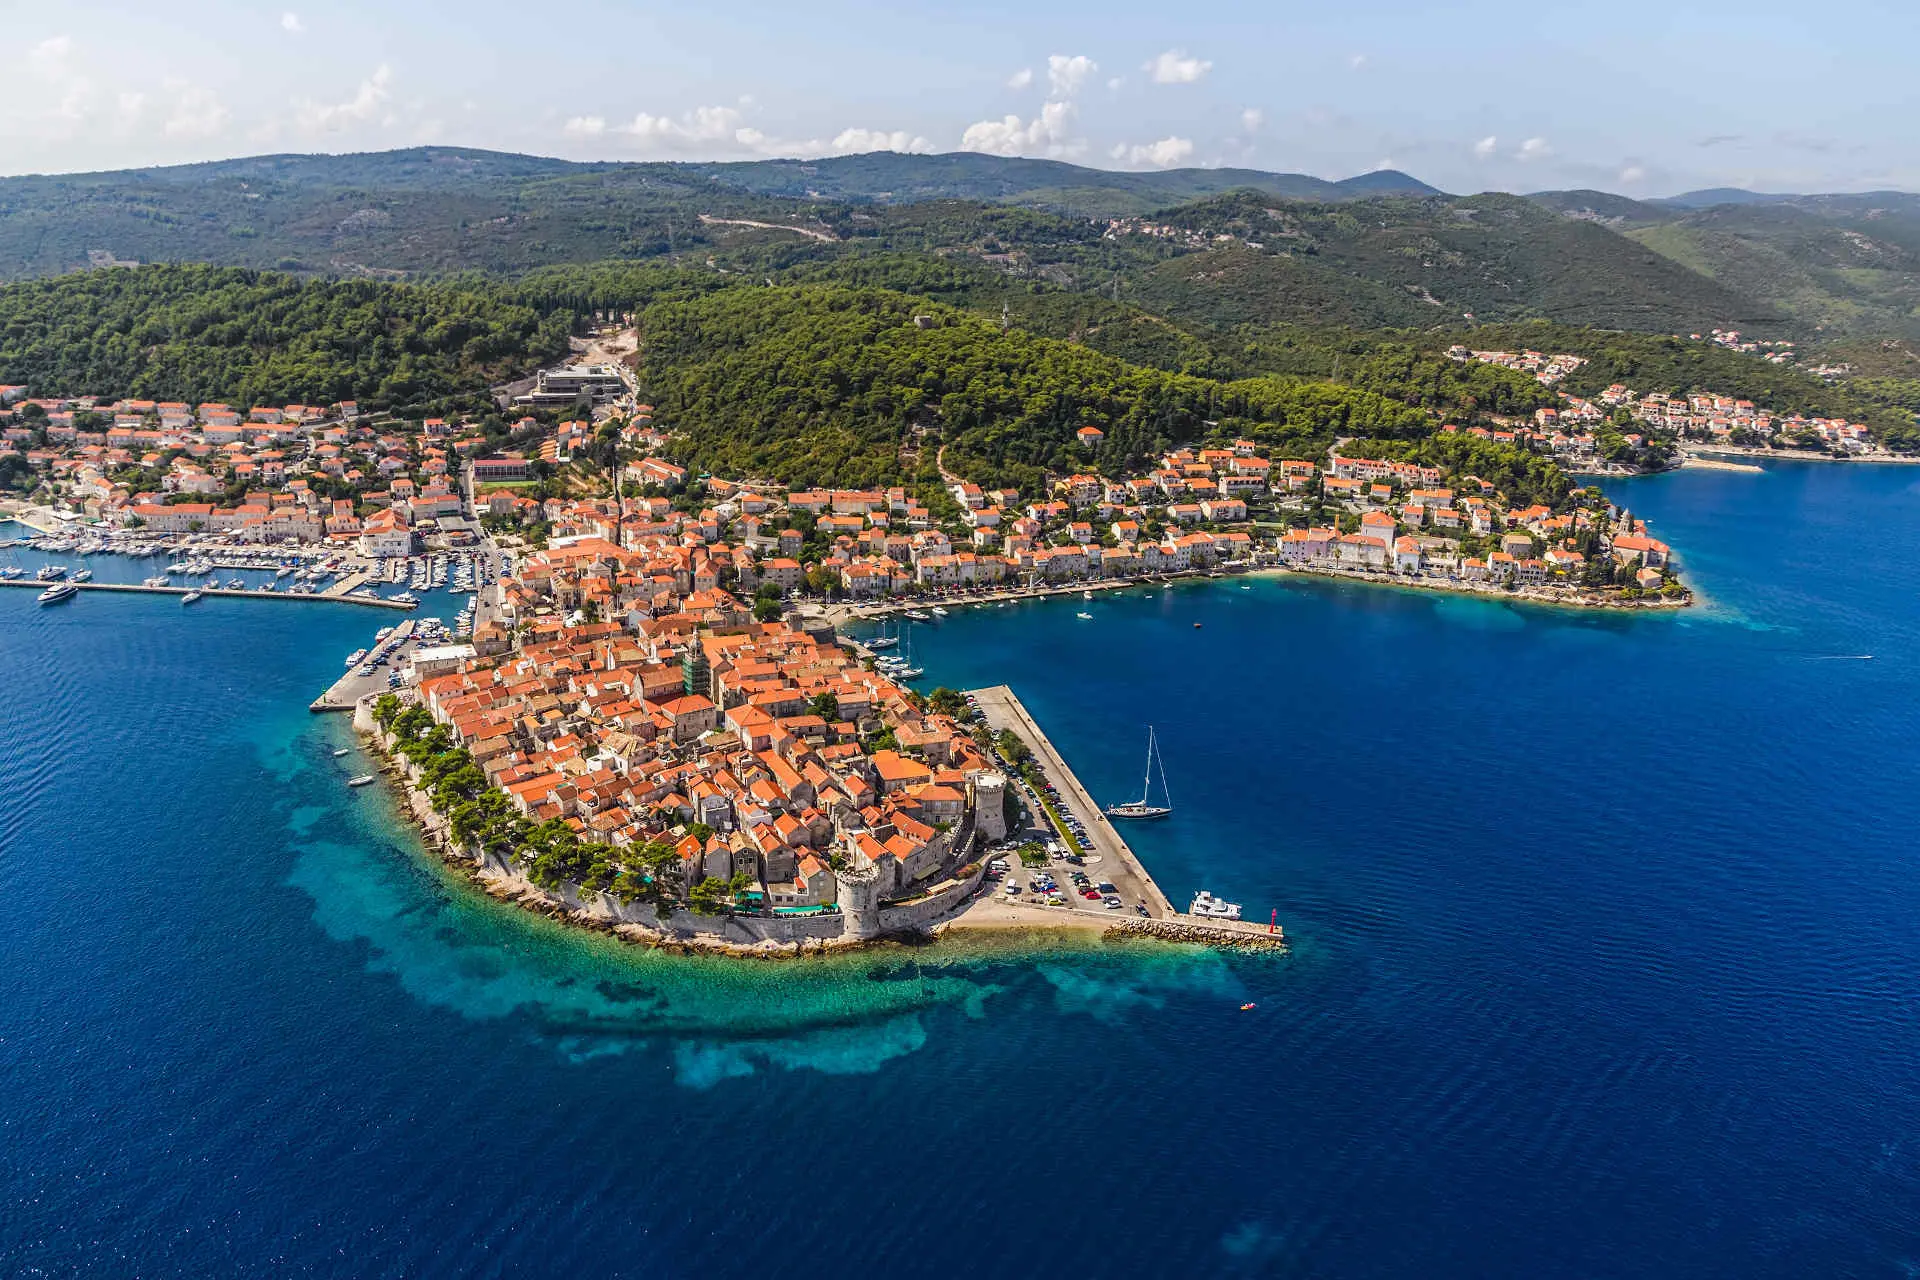 Tip of the Korcula island in Croatia